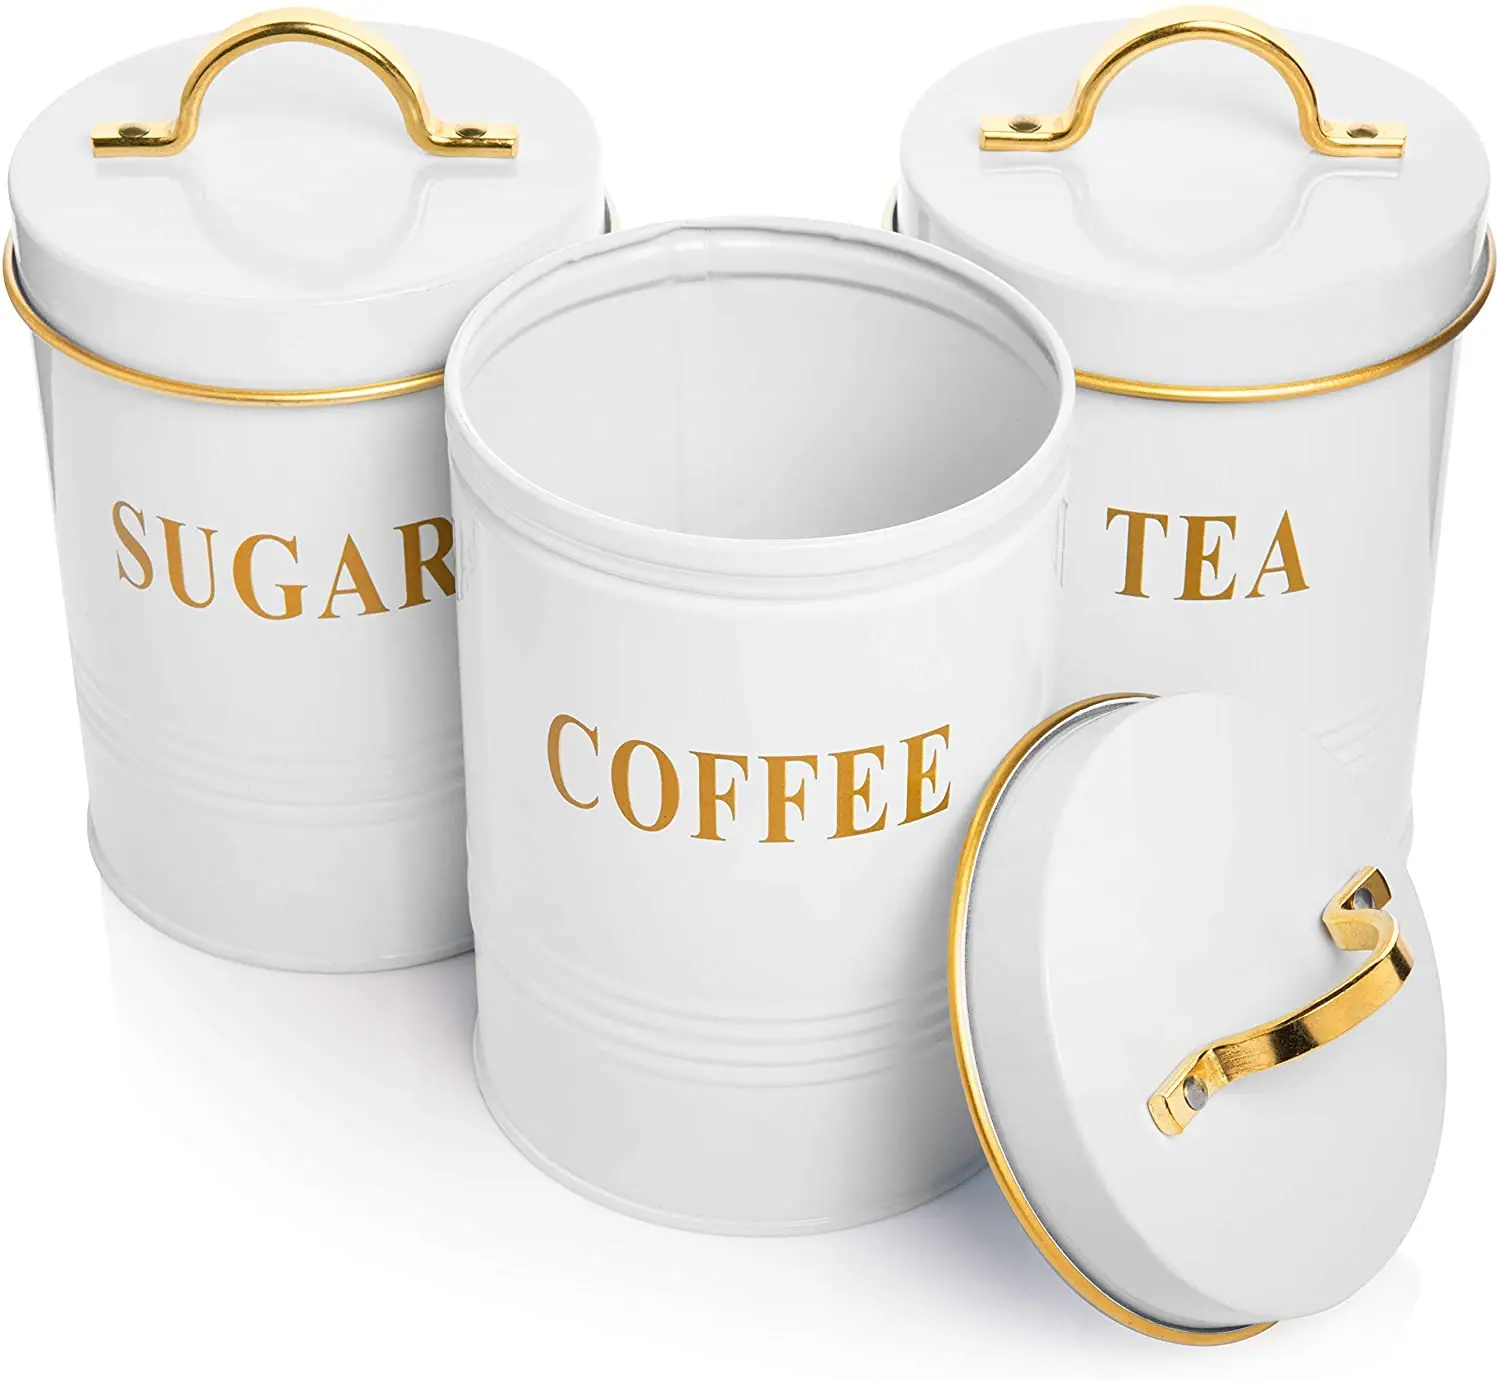 Чай сахар купить. Железный контейнер для сахара. Банка круглая Tea & Coffee. Железные тары для кухни круглые. Кофе с сахаром.